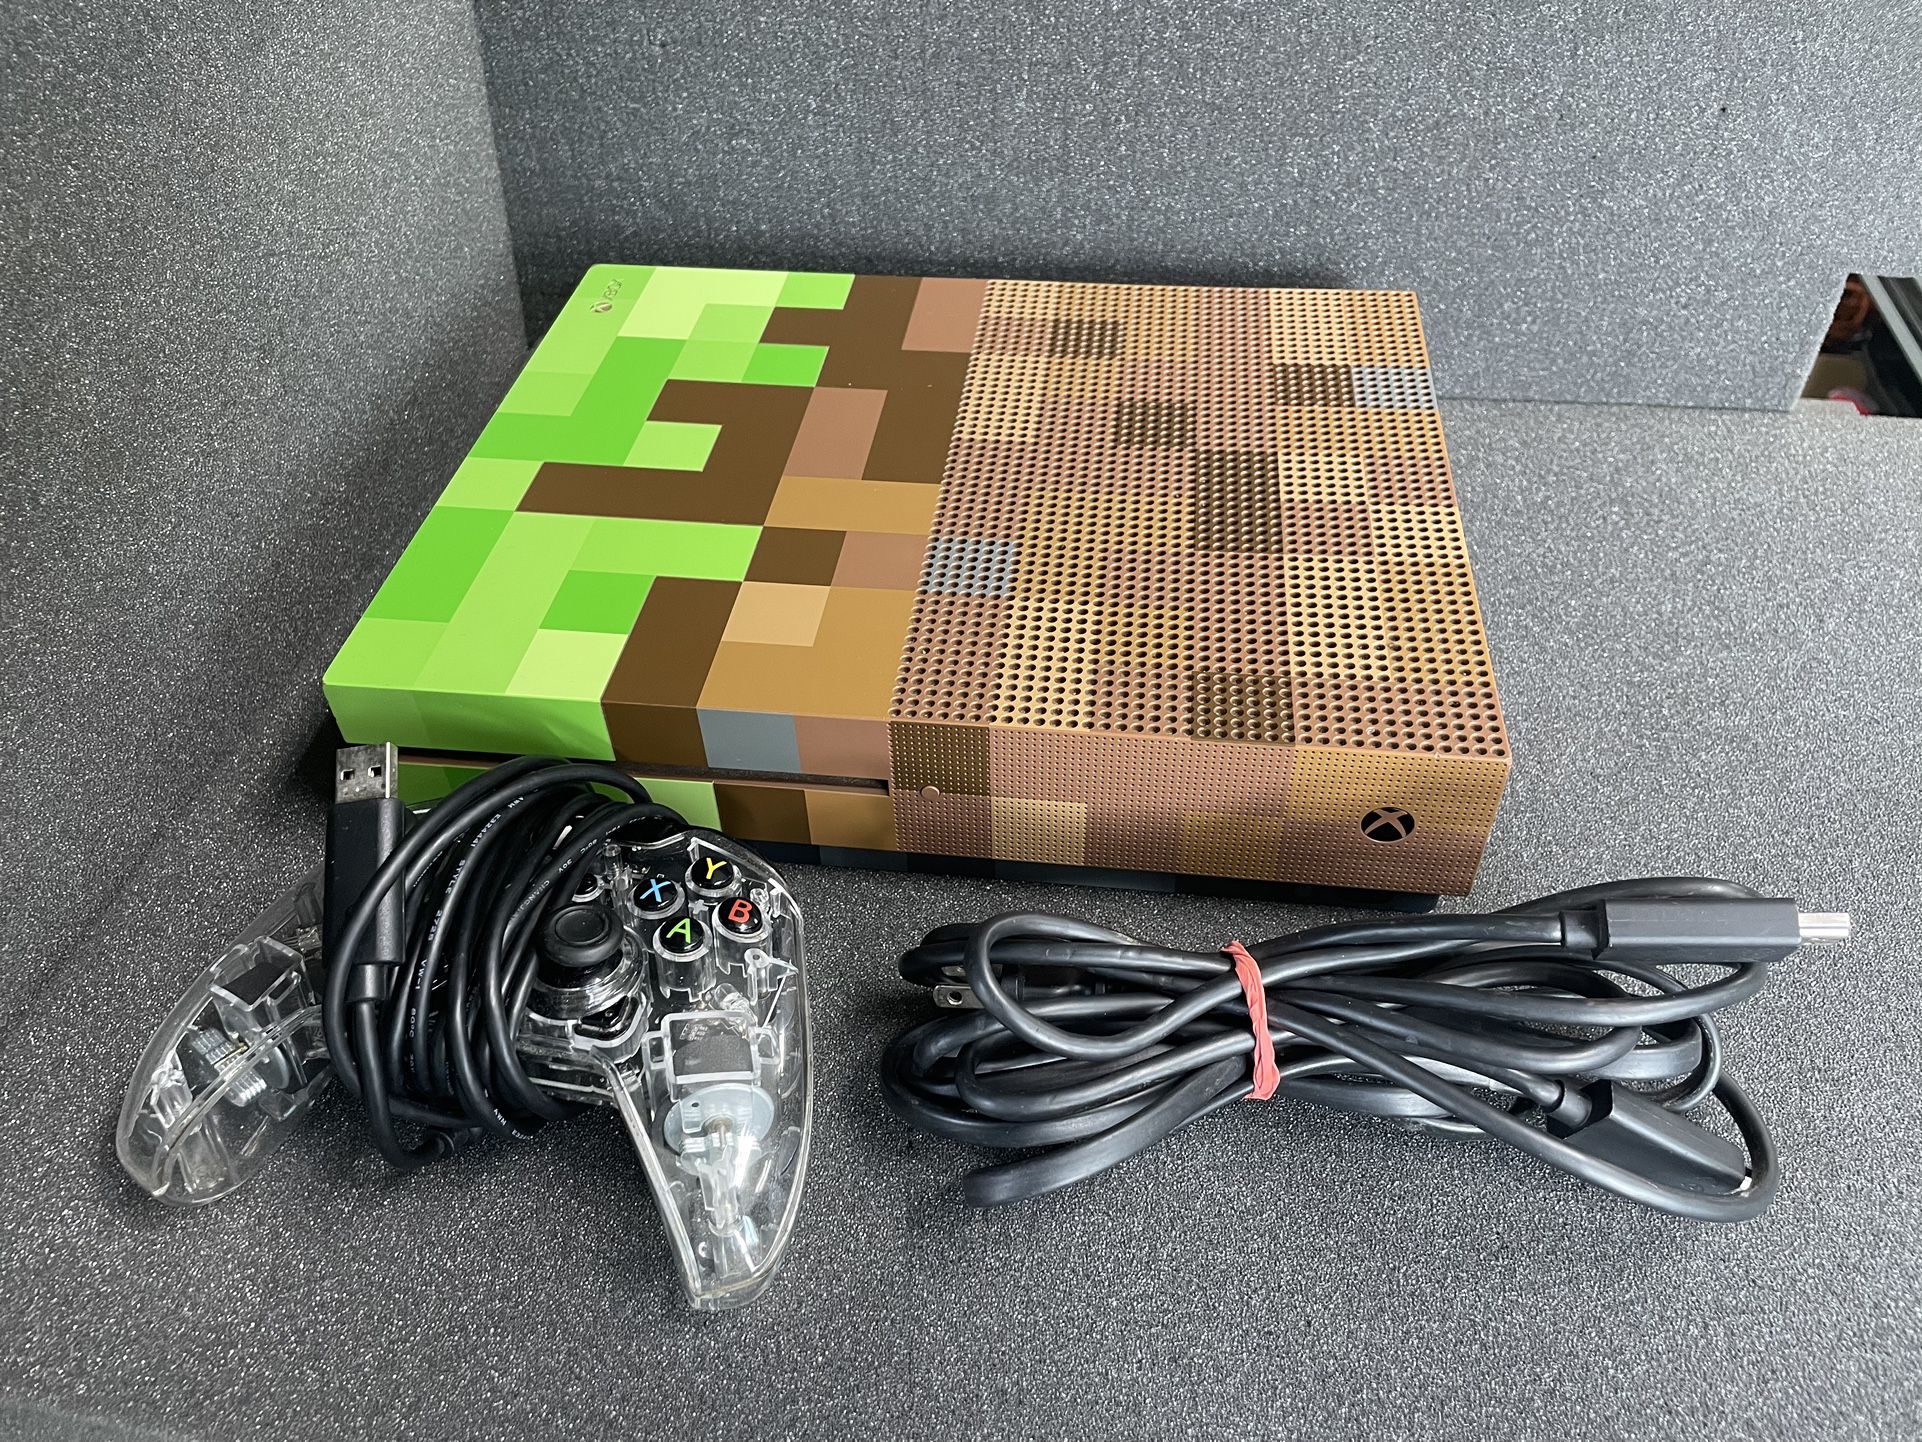 Xbox One S Minecraft Edition 512 GB